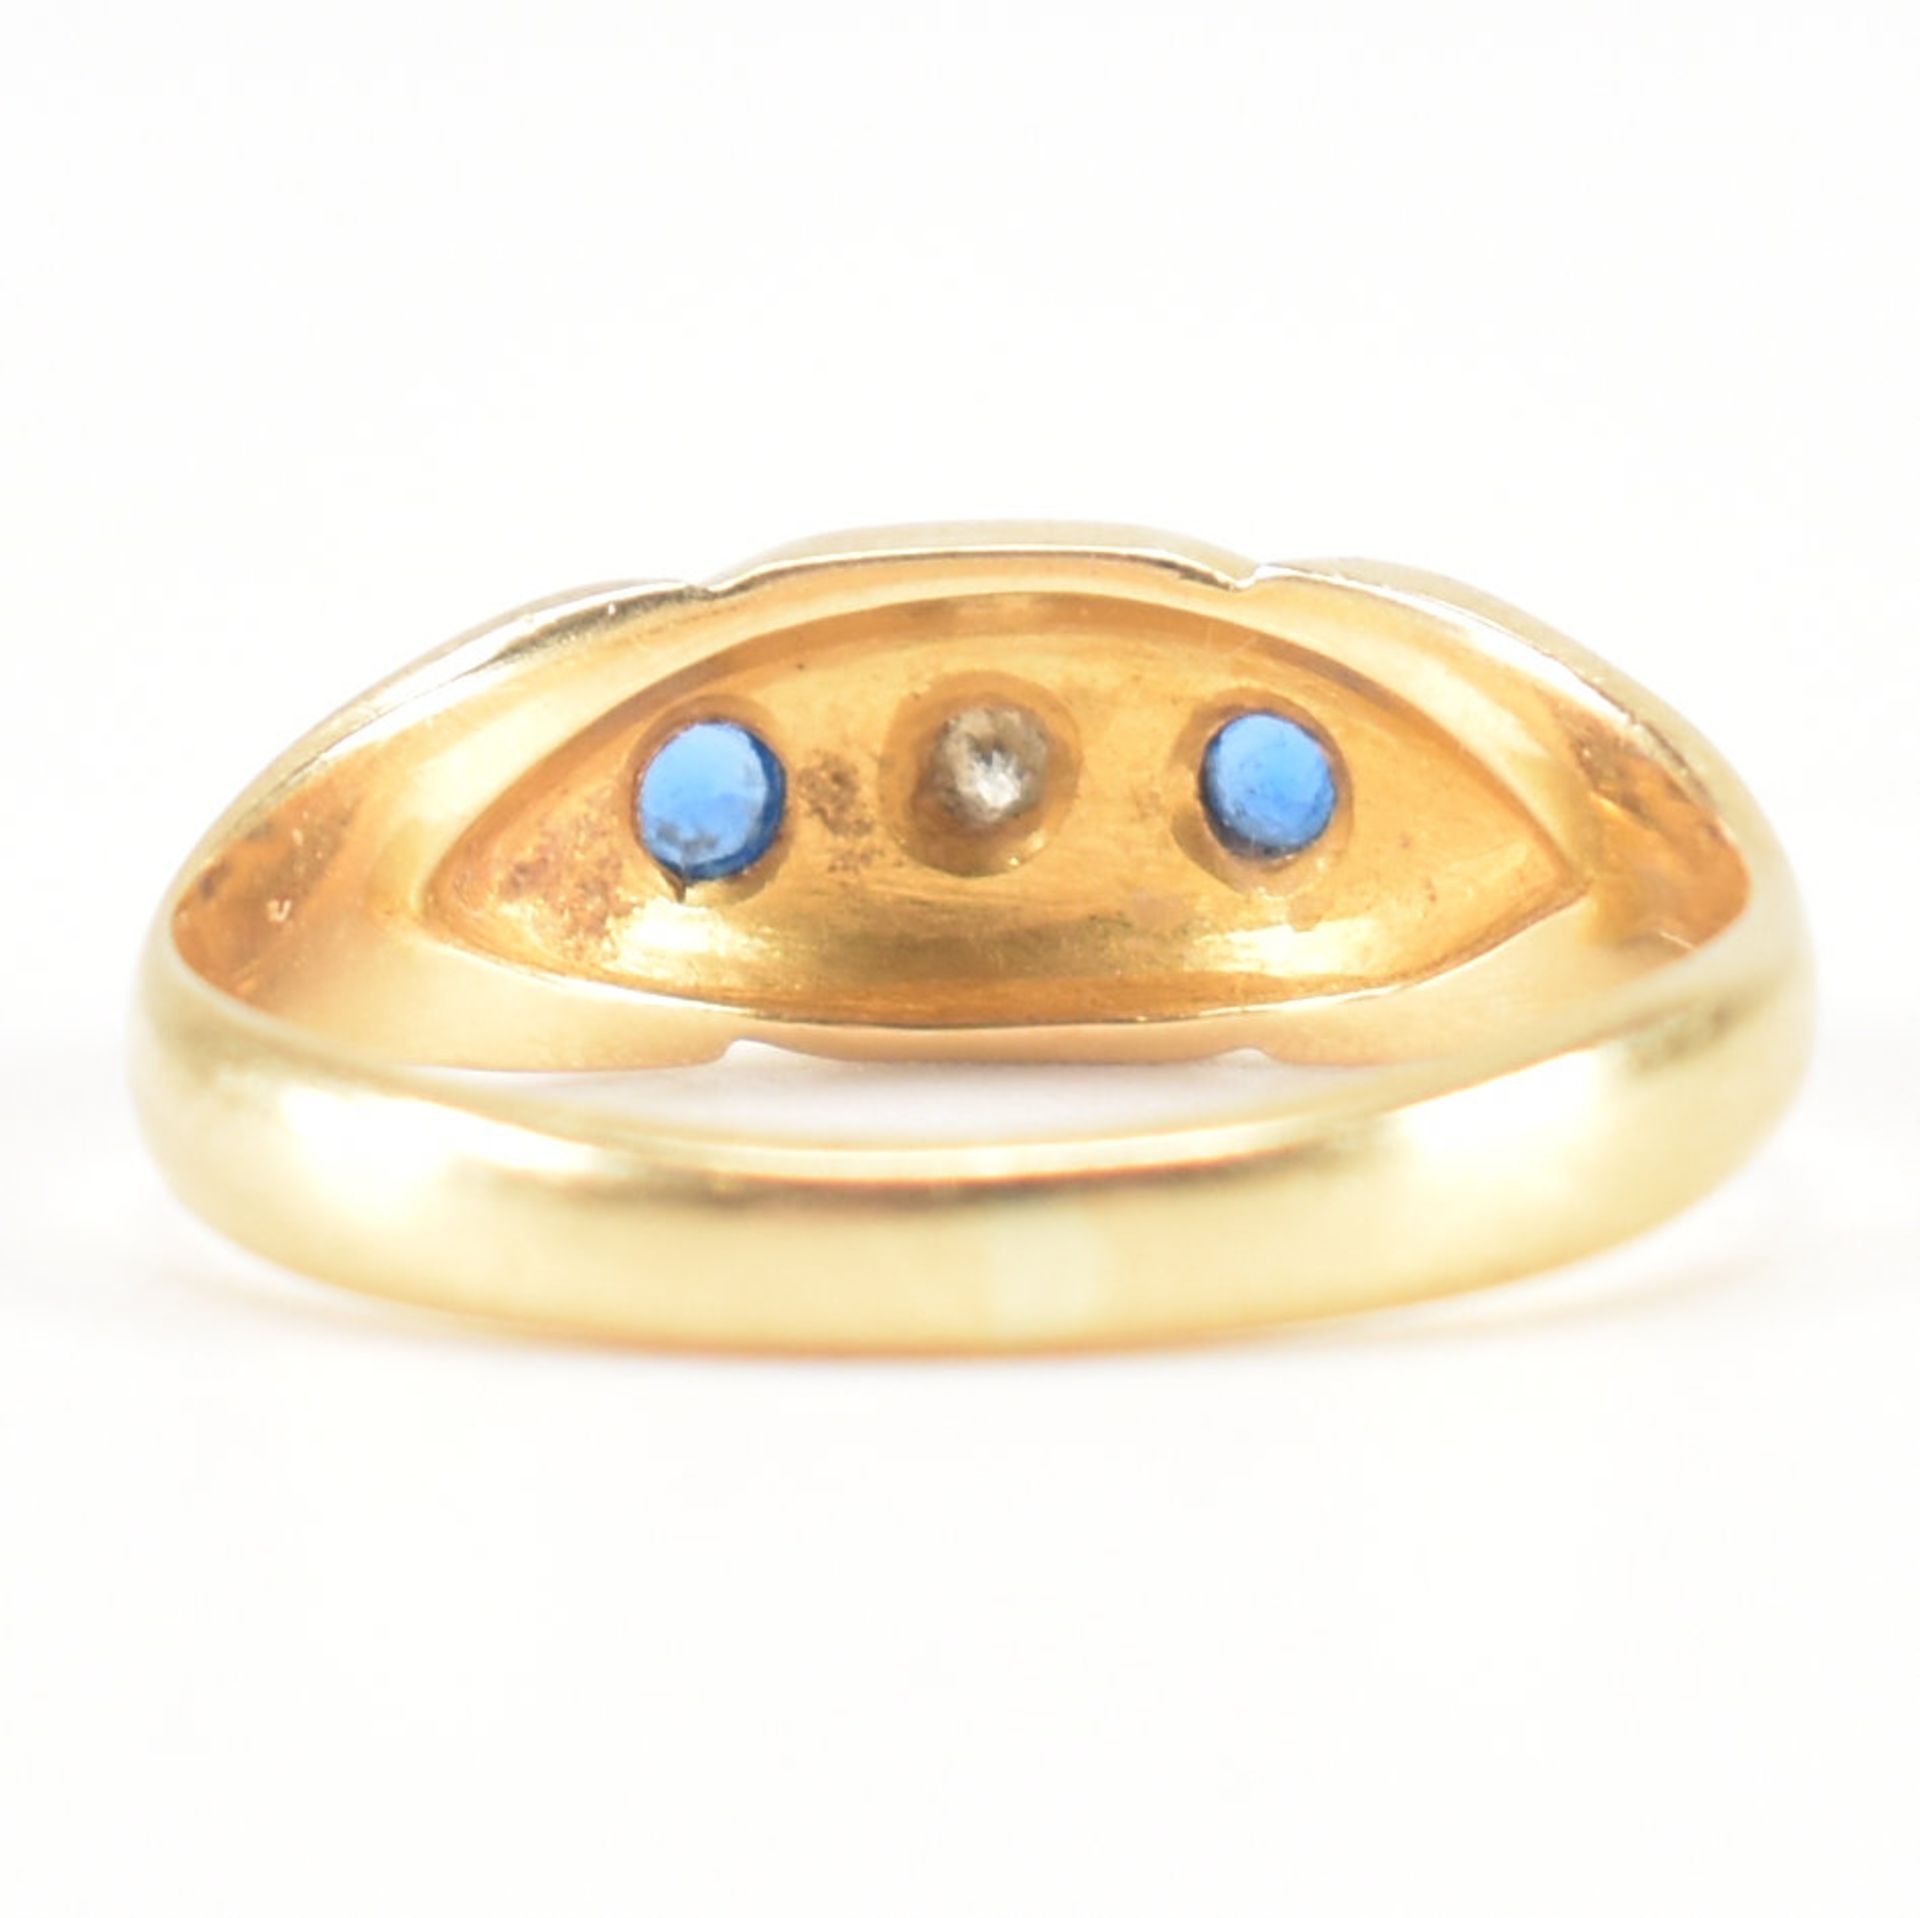 HALLMARKED 18CT GOLD DIAMOND & BLUE STONE RING - Image 4 of 9